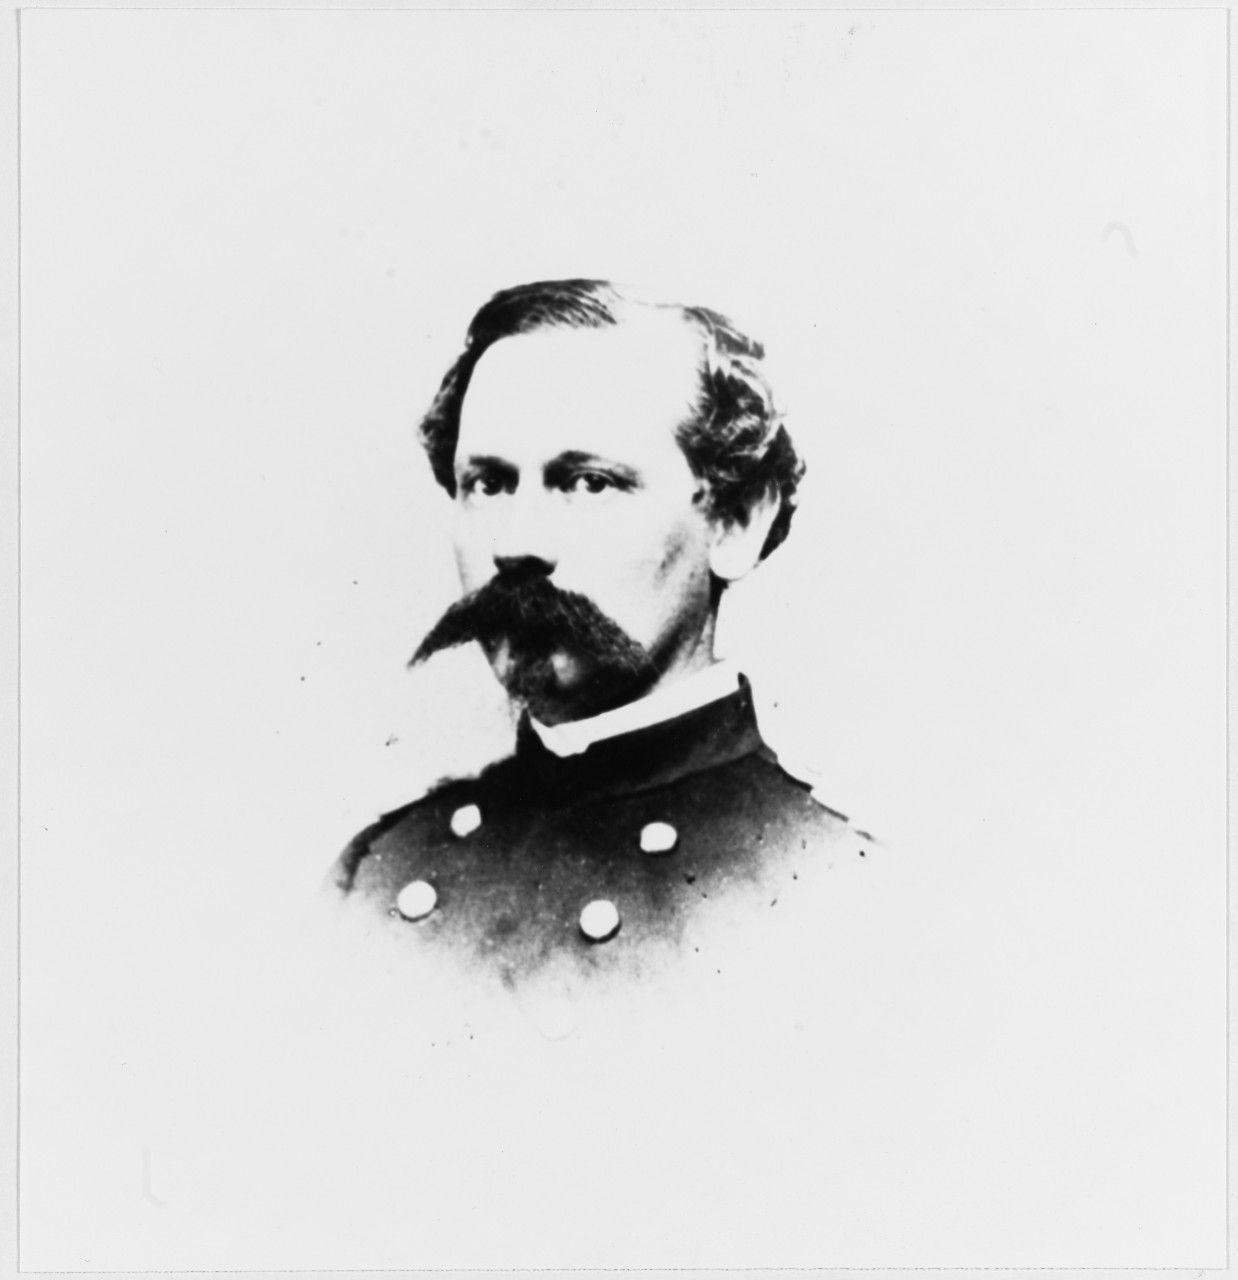 Captain John Schermerhorn, U.S. Marine Corps